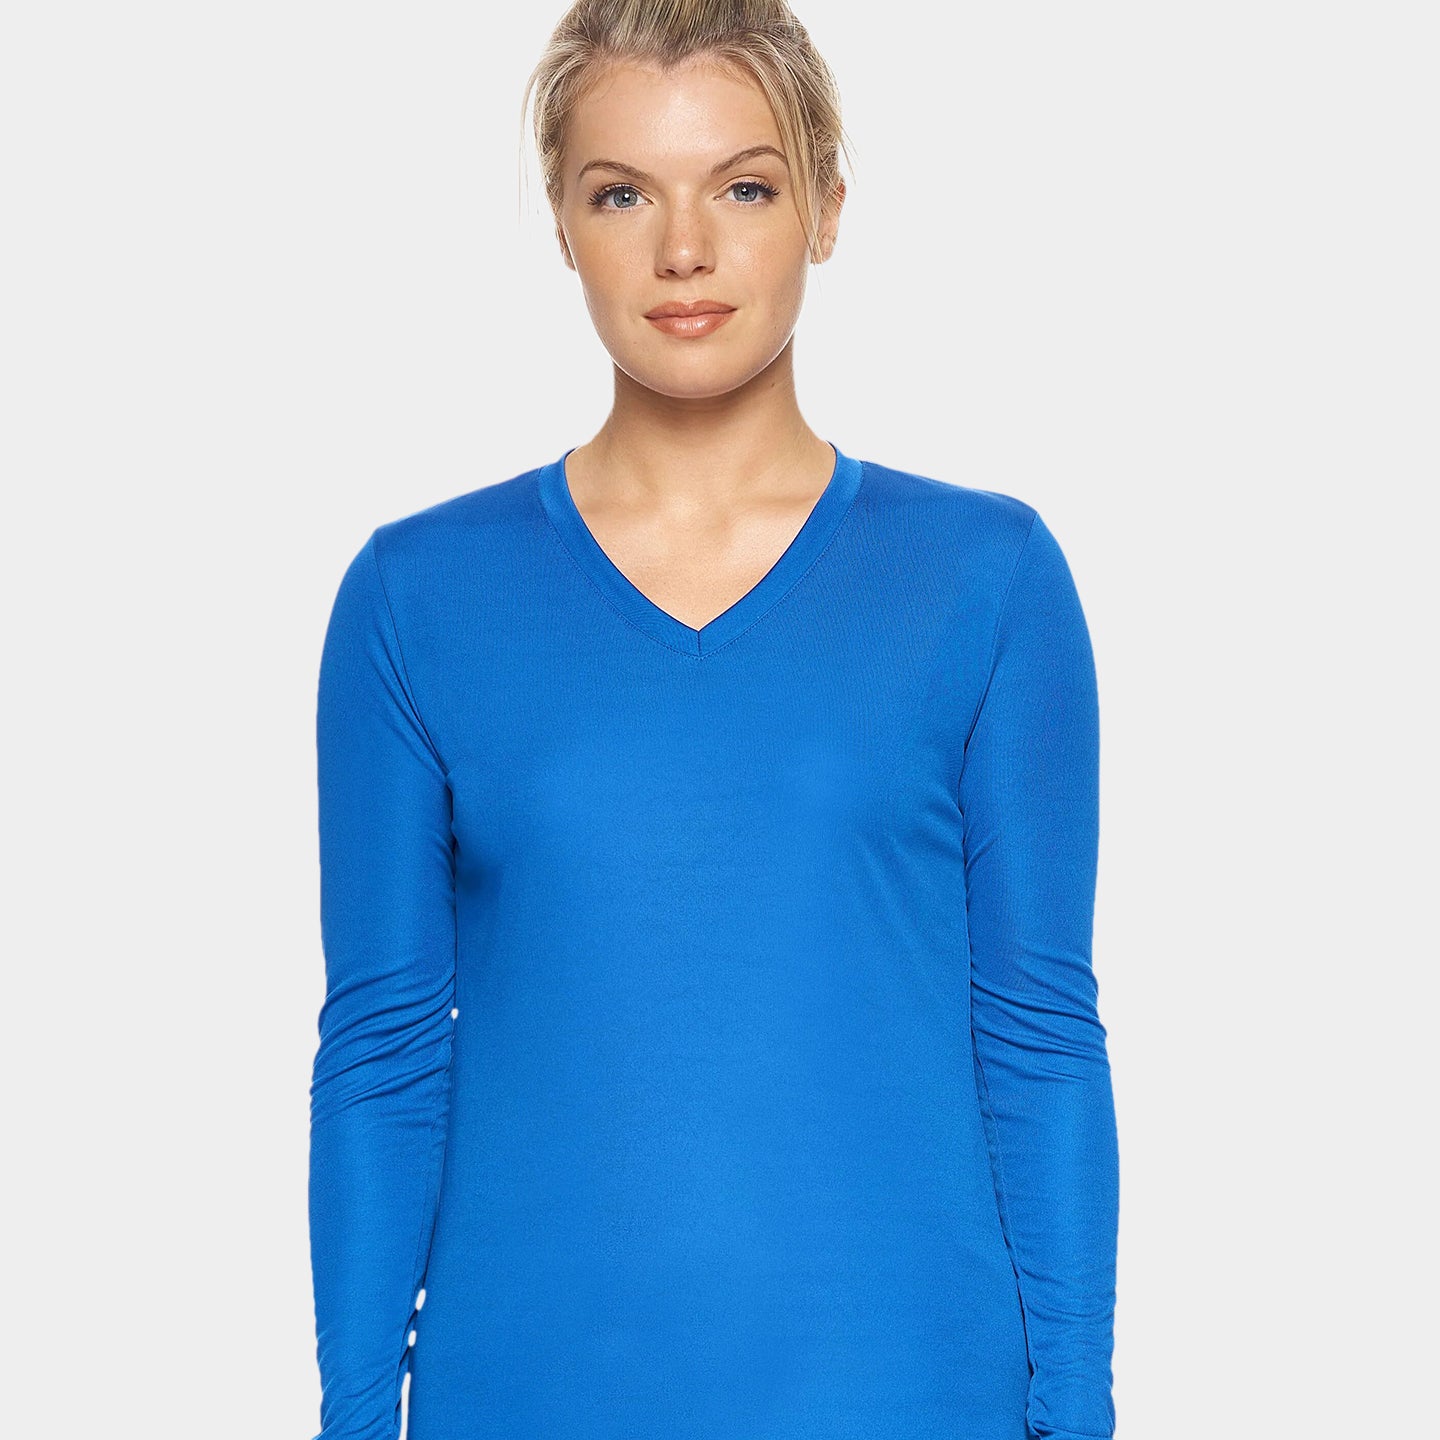 Expert Brand DriMax Women's Performance V-Neck Long Sleeve Shirt, 3XL, Royal Blue A1